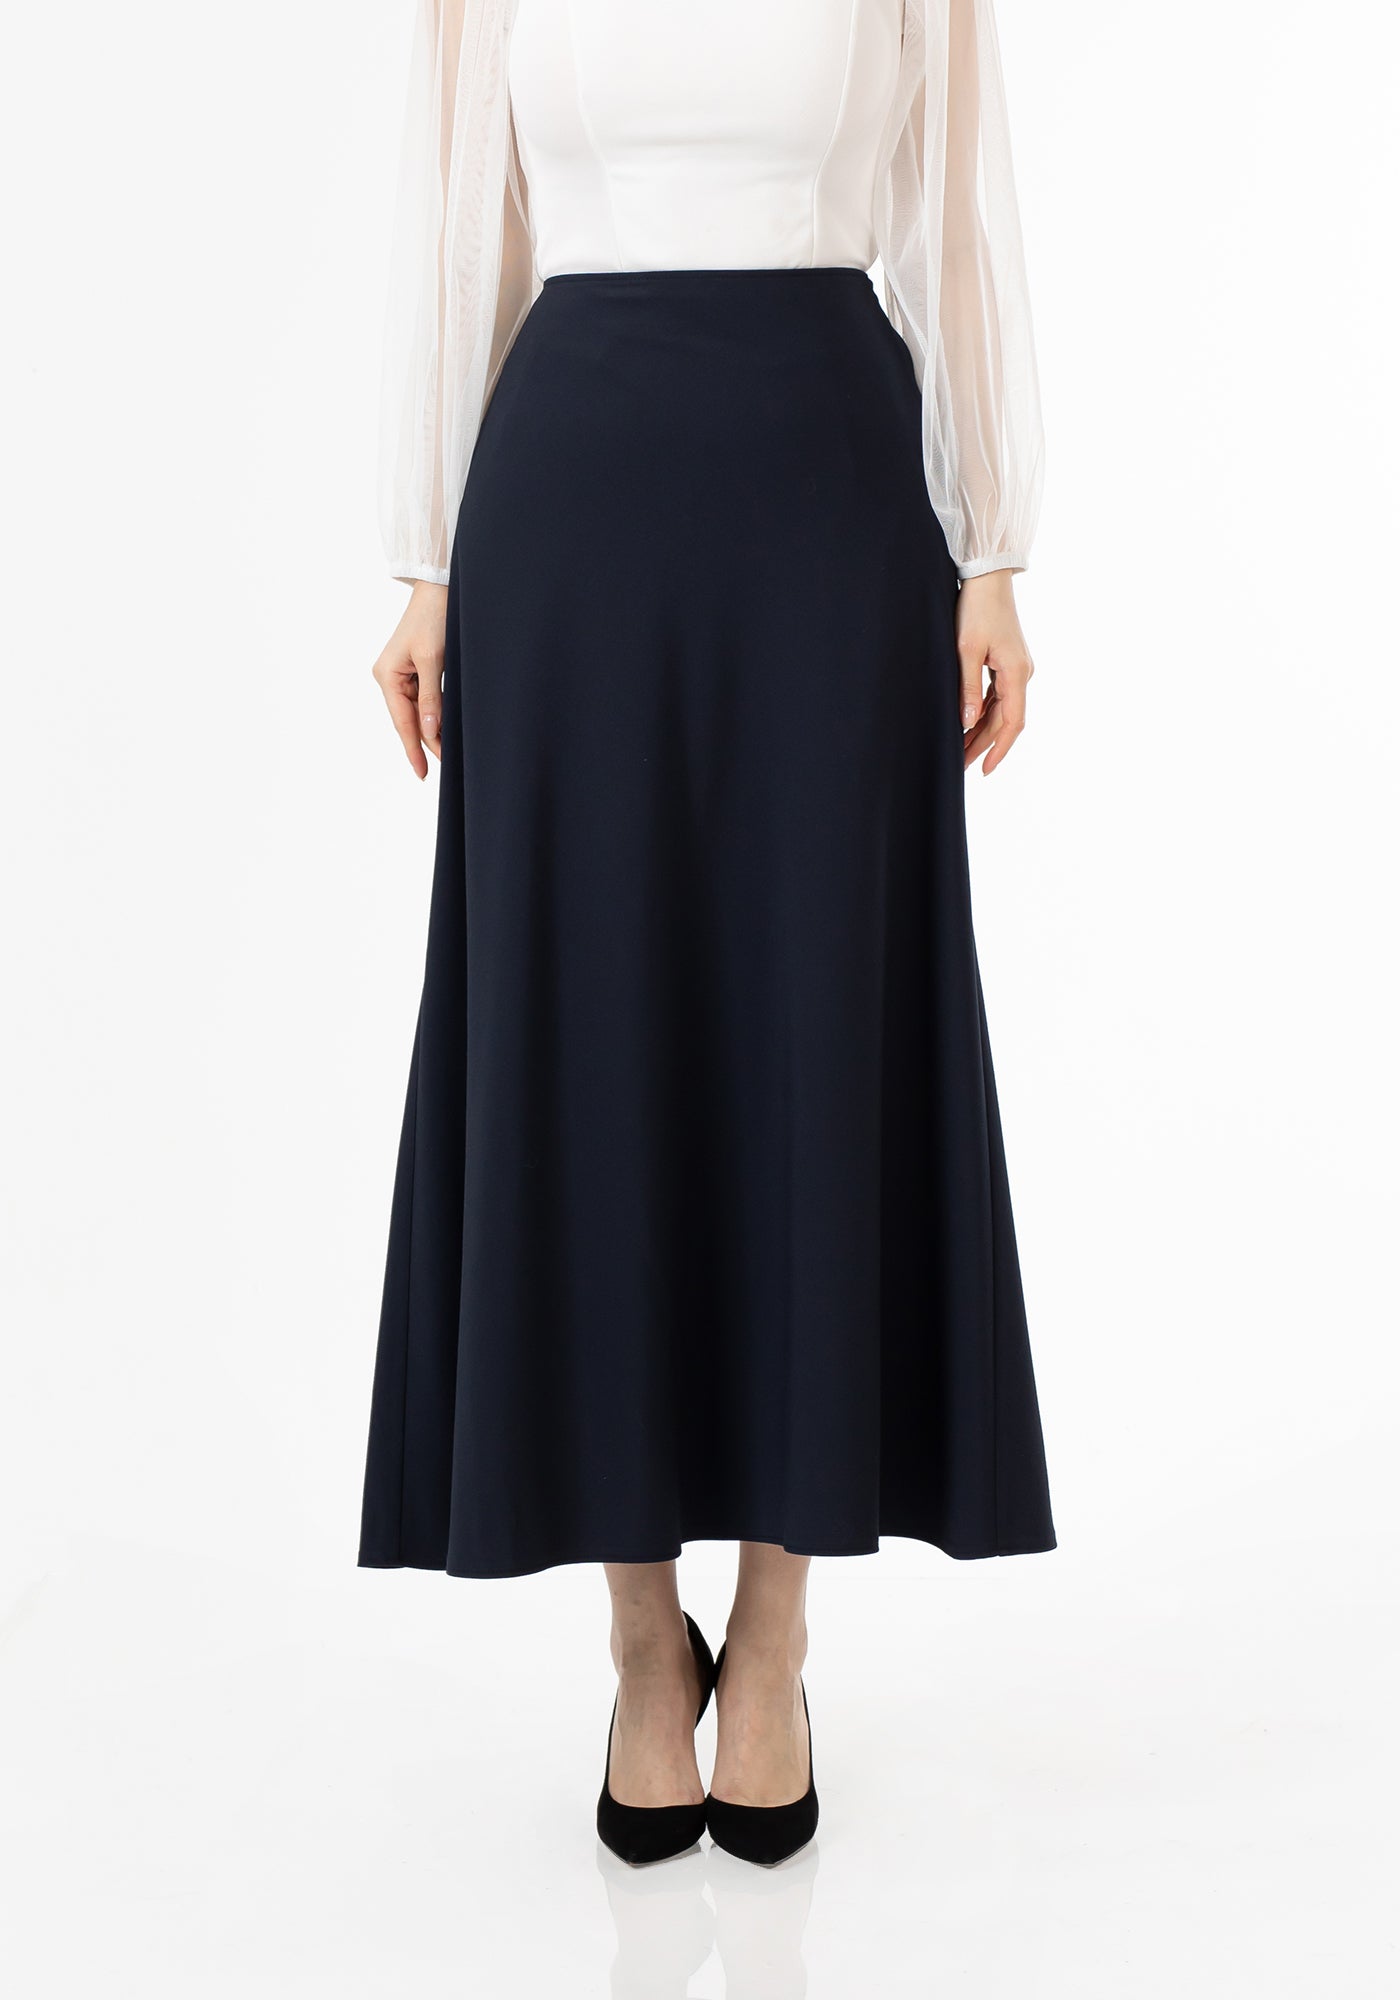 G-Line Navy A-Line Style Comfy Maxi Dress Skirt